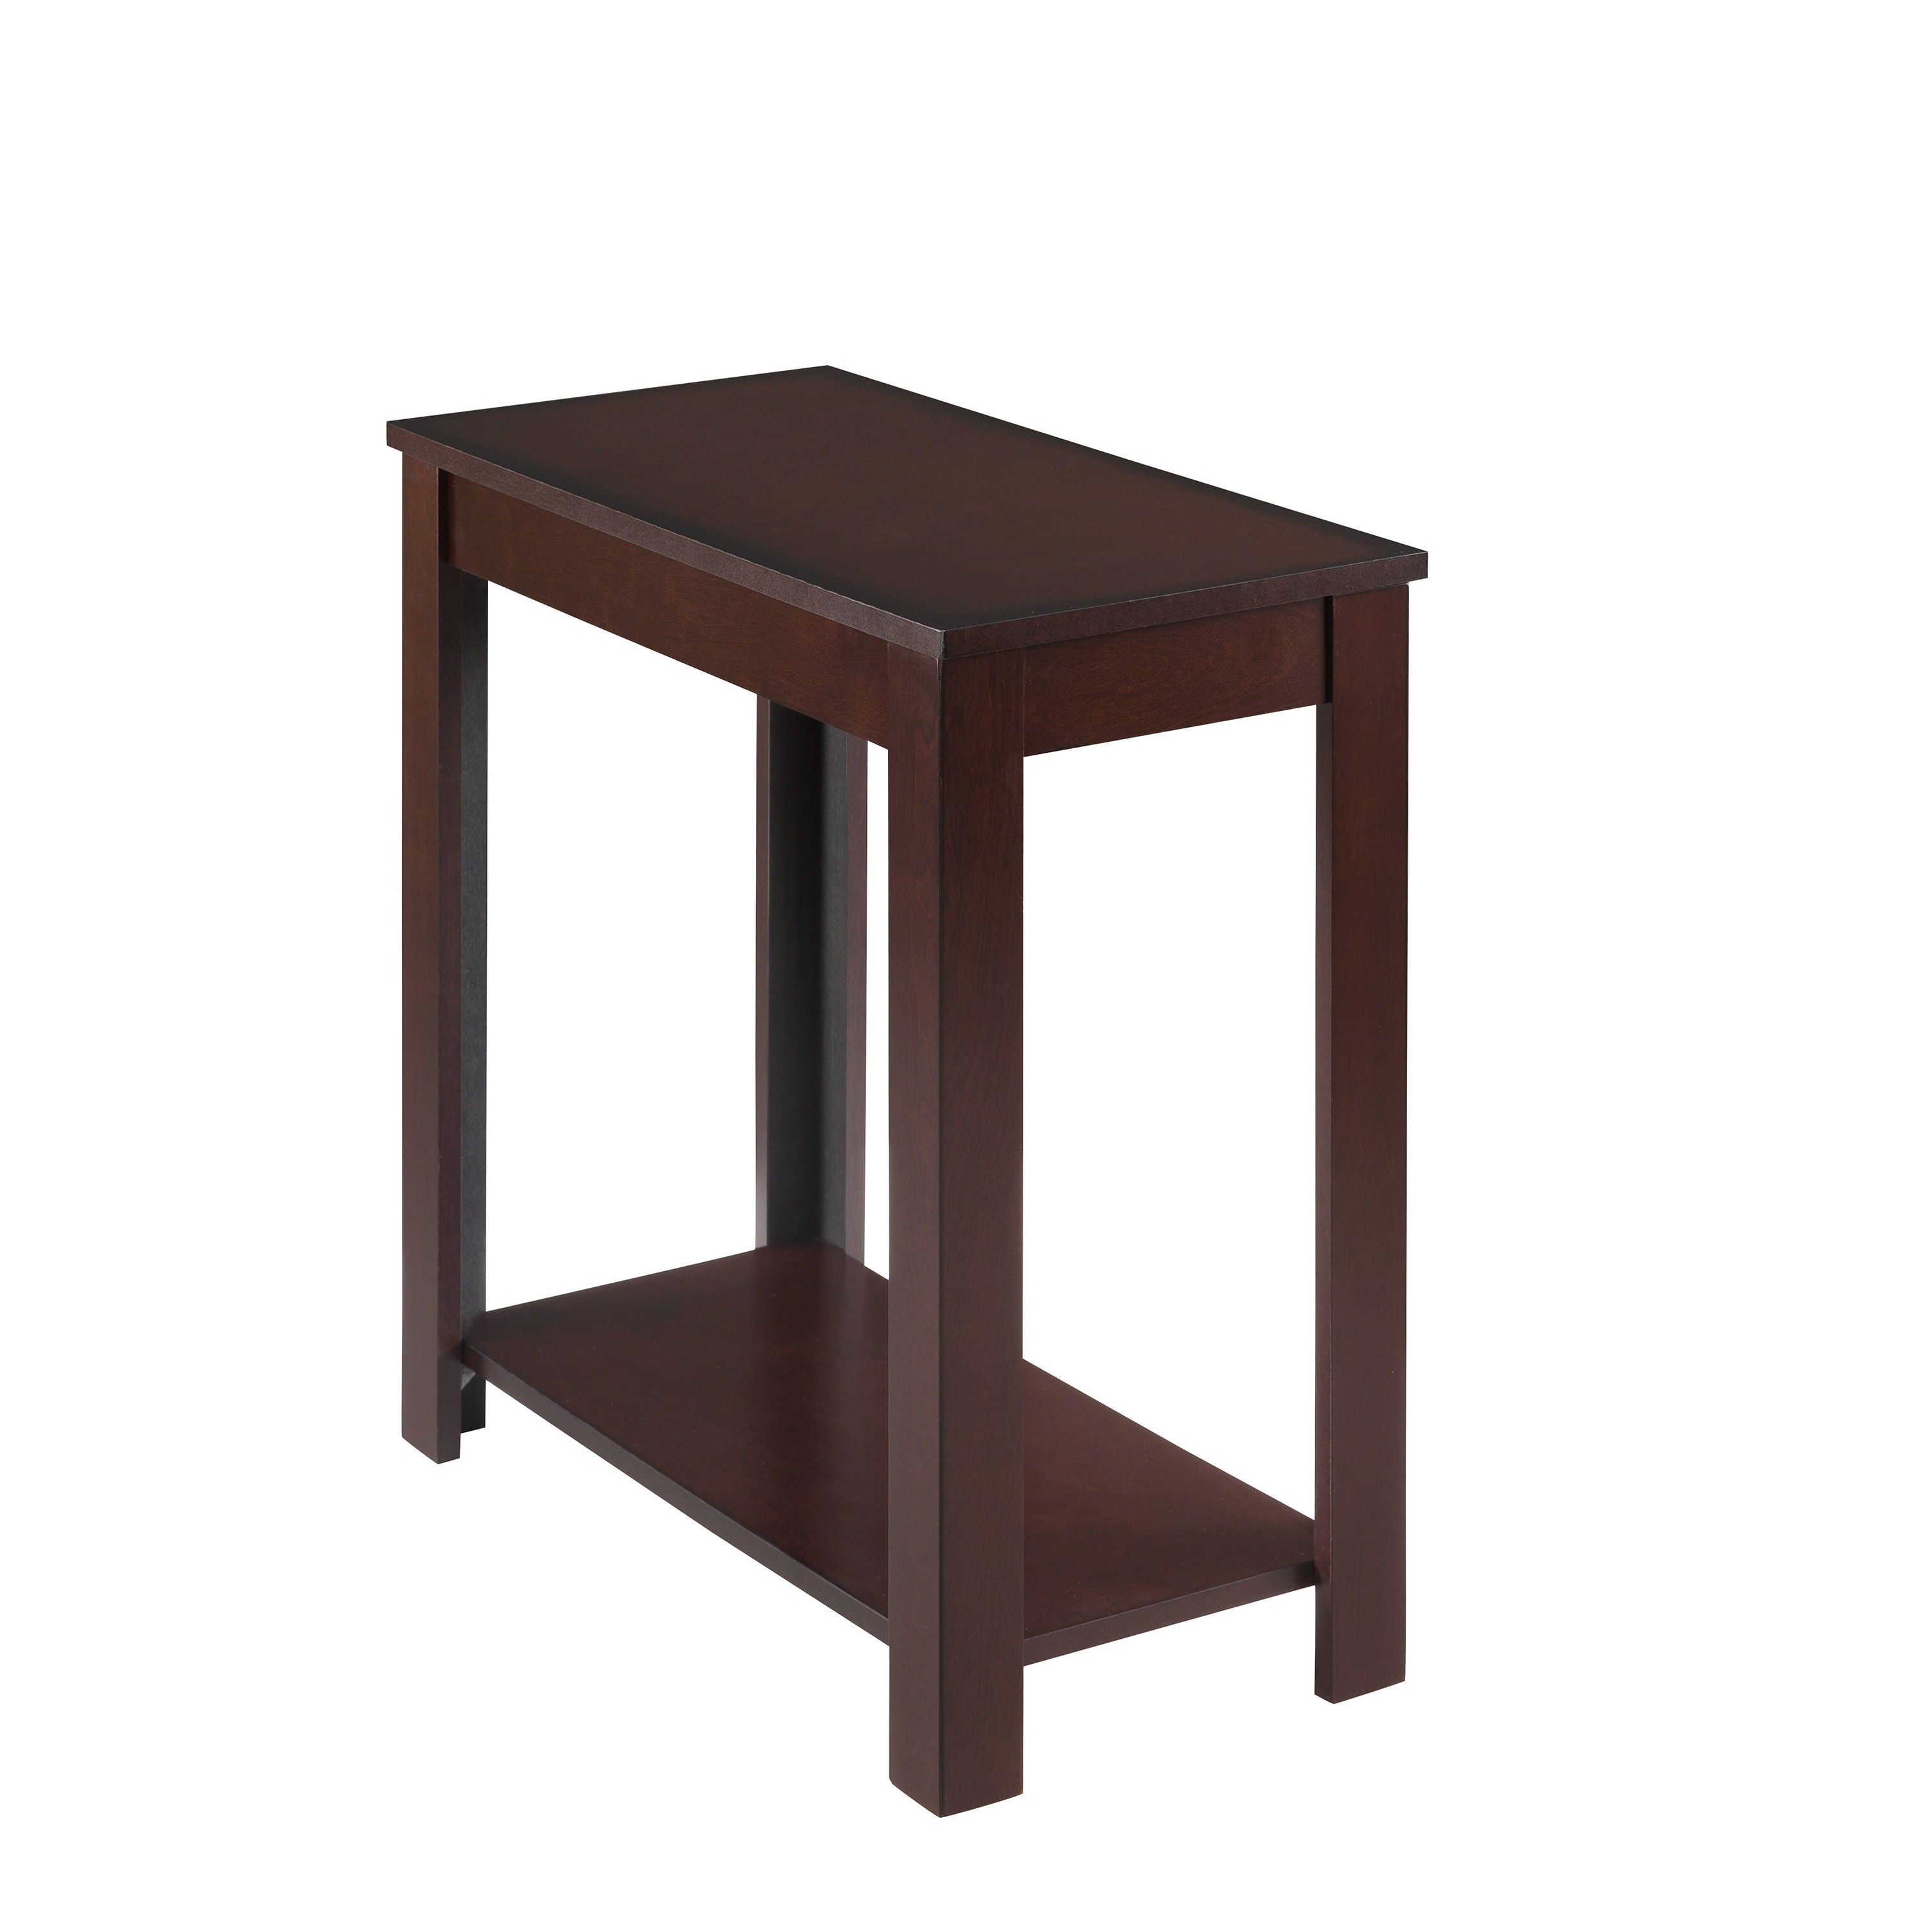 Pierce - Chairside Table